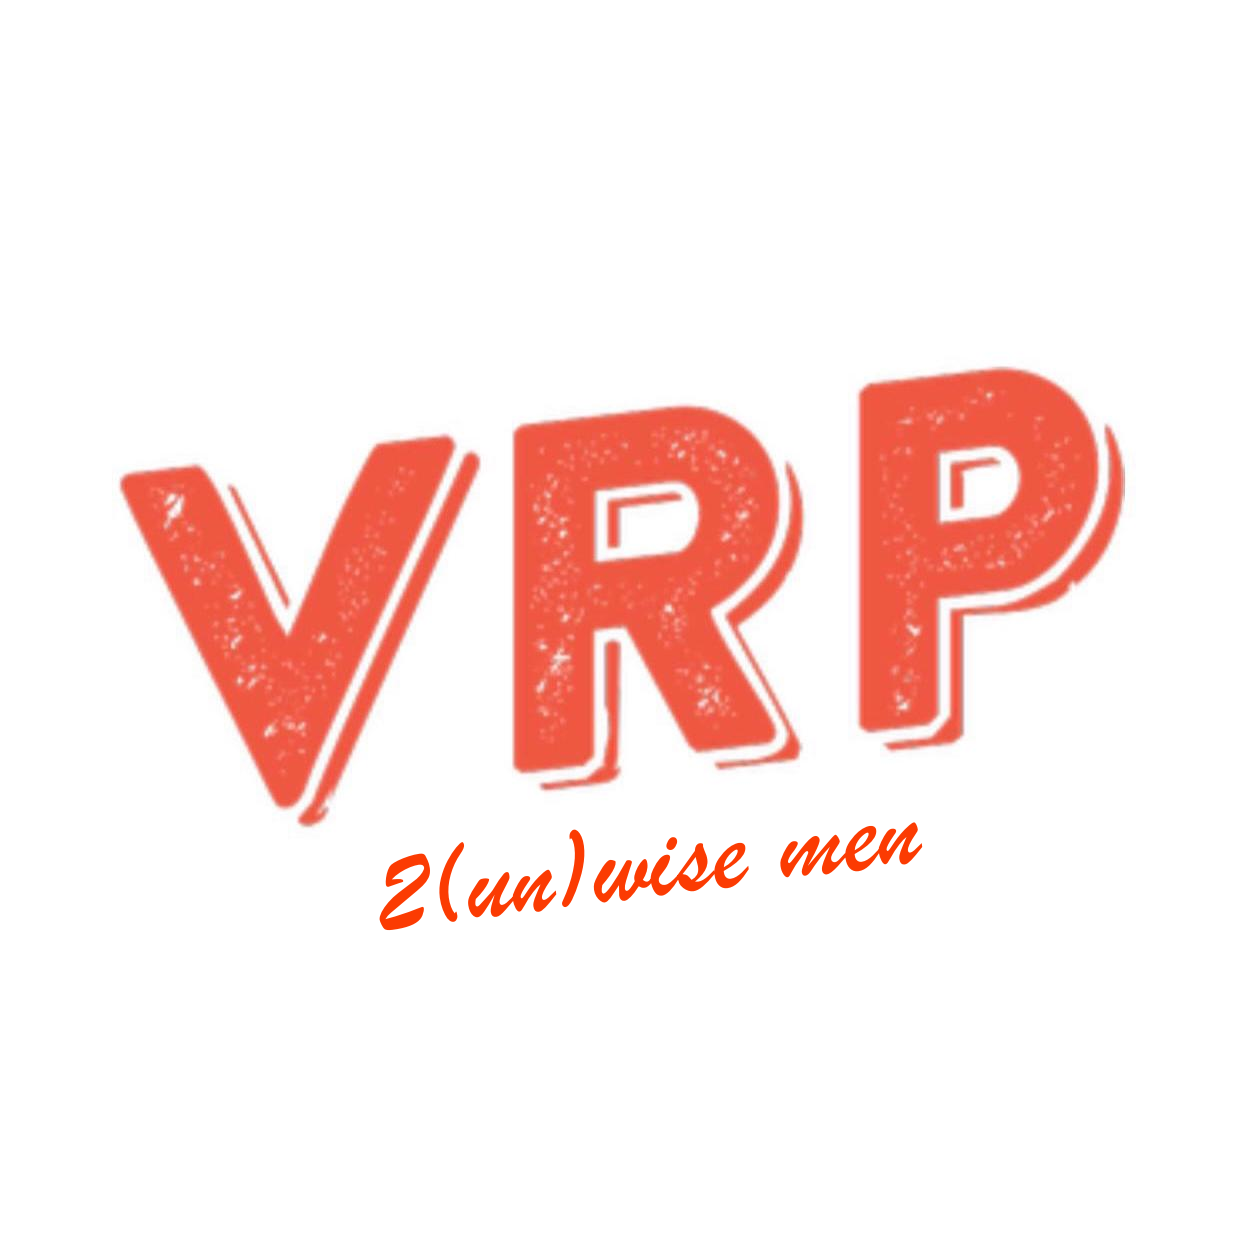 VRP - Verbal Reasoning Podcast